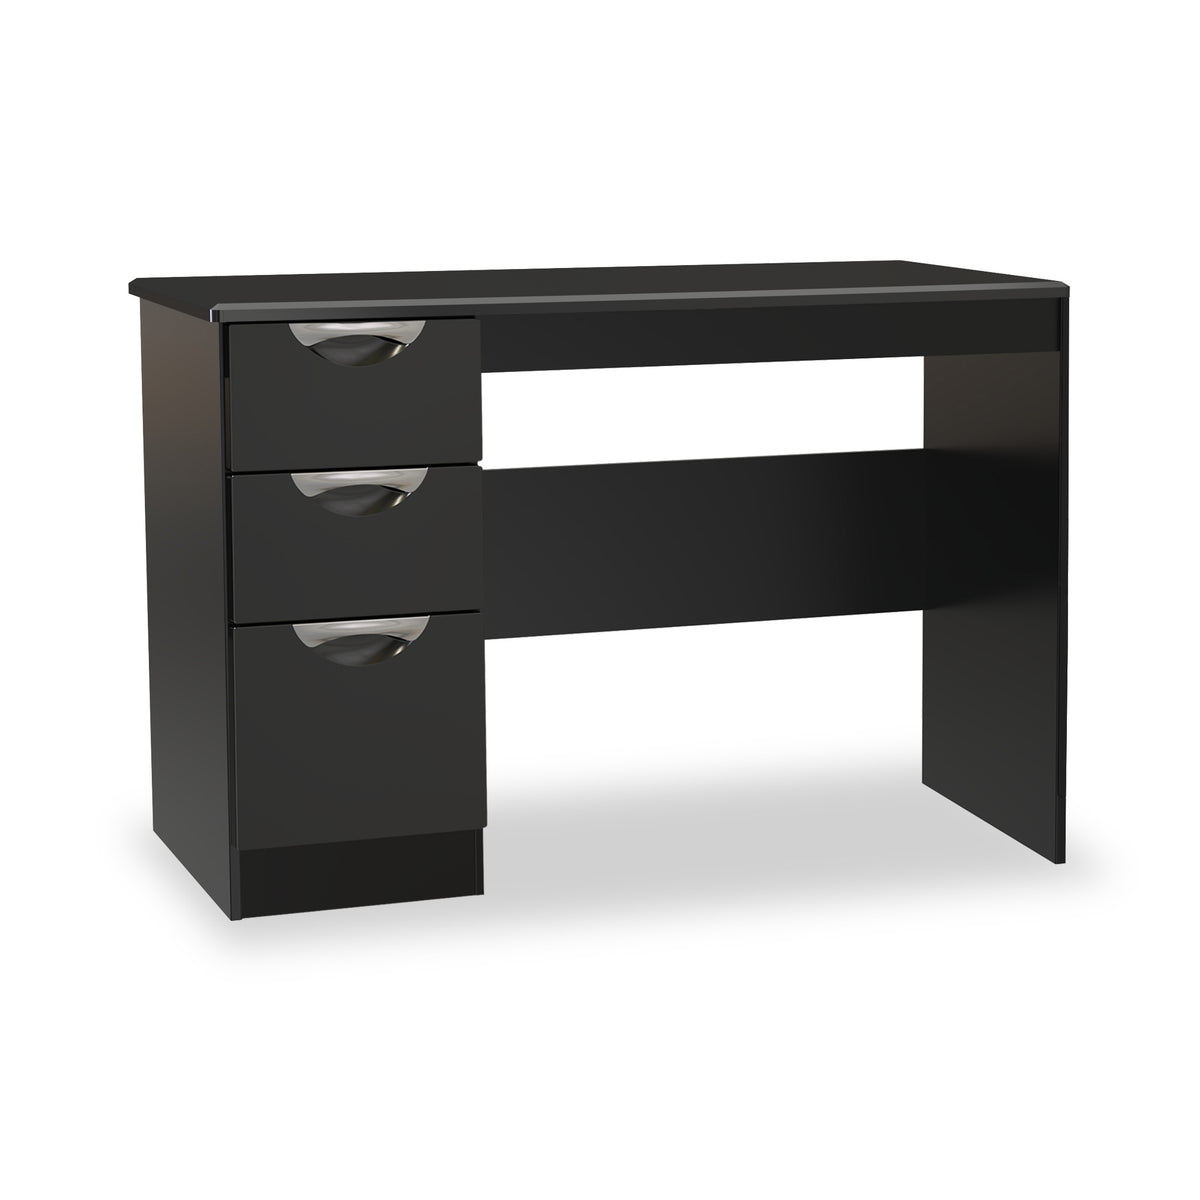 Beckett Black Gloss 3 Drawer Storage Desk from Roseland Furniture